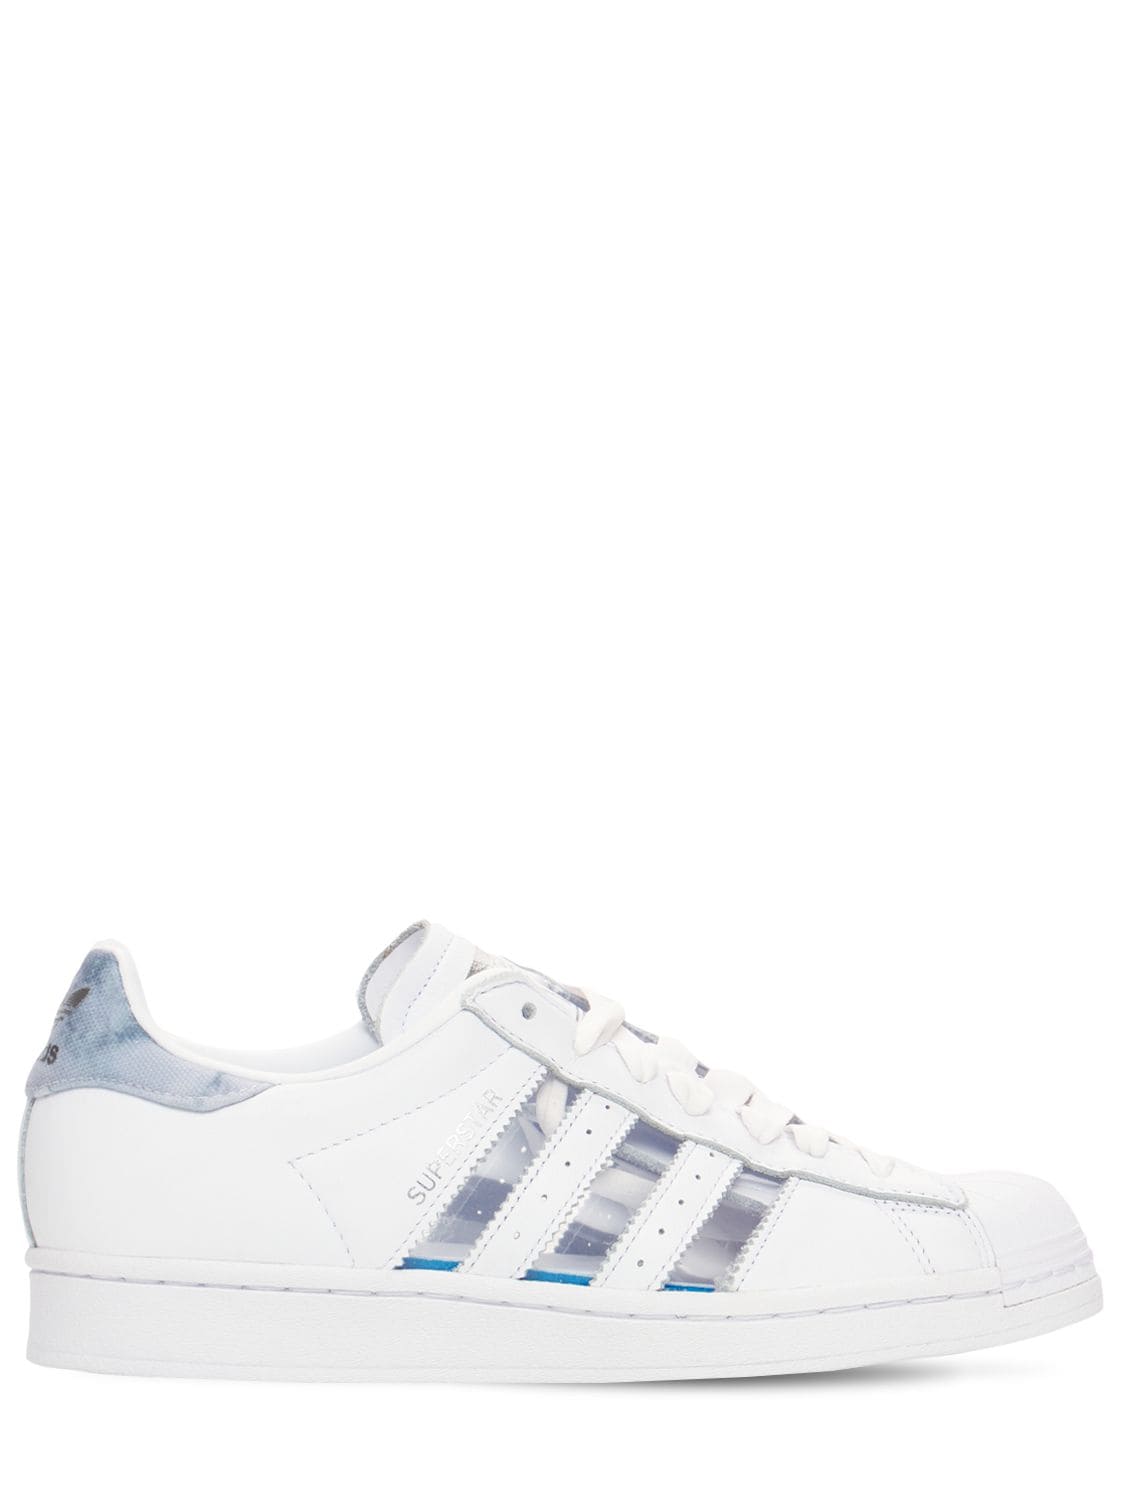 Adidas Originals Superstar Transparent Leather Sneakers In White,transp ...